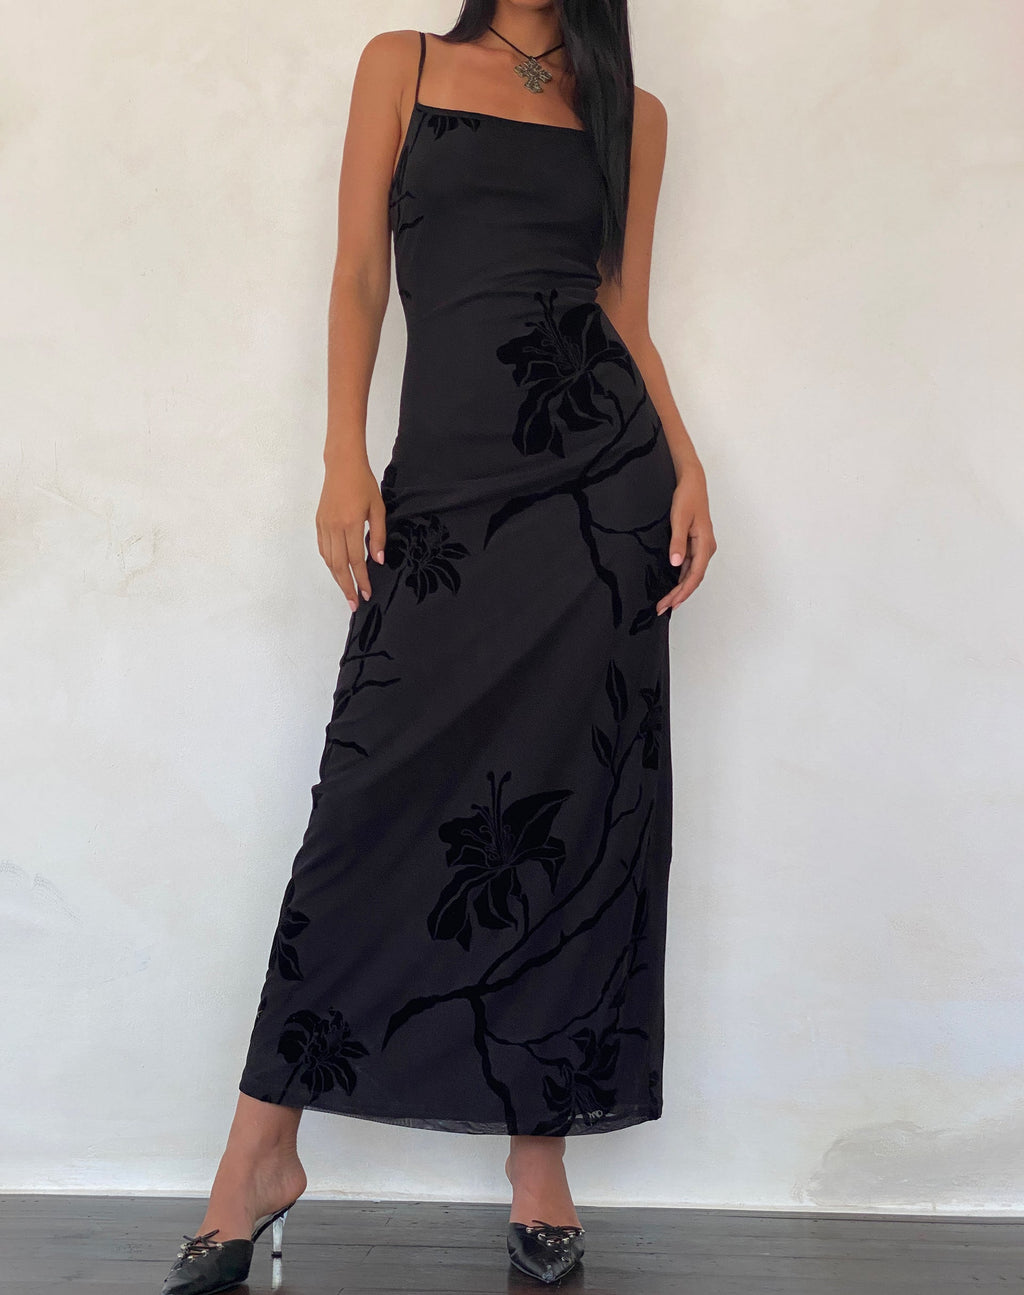 Mesh Black Abstract Flower Flock Long Sleeve Mini Dress